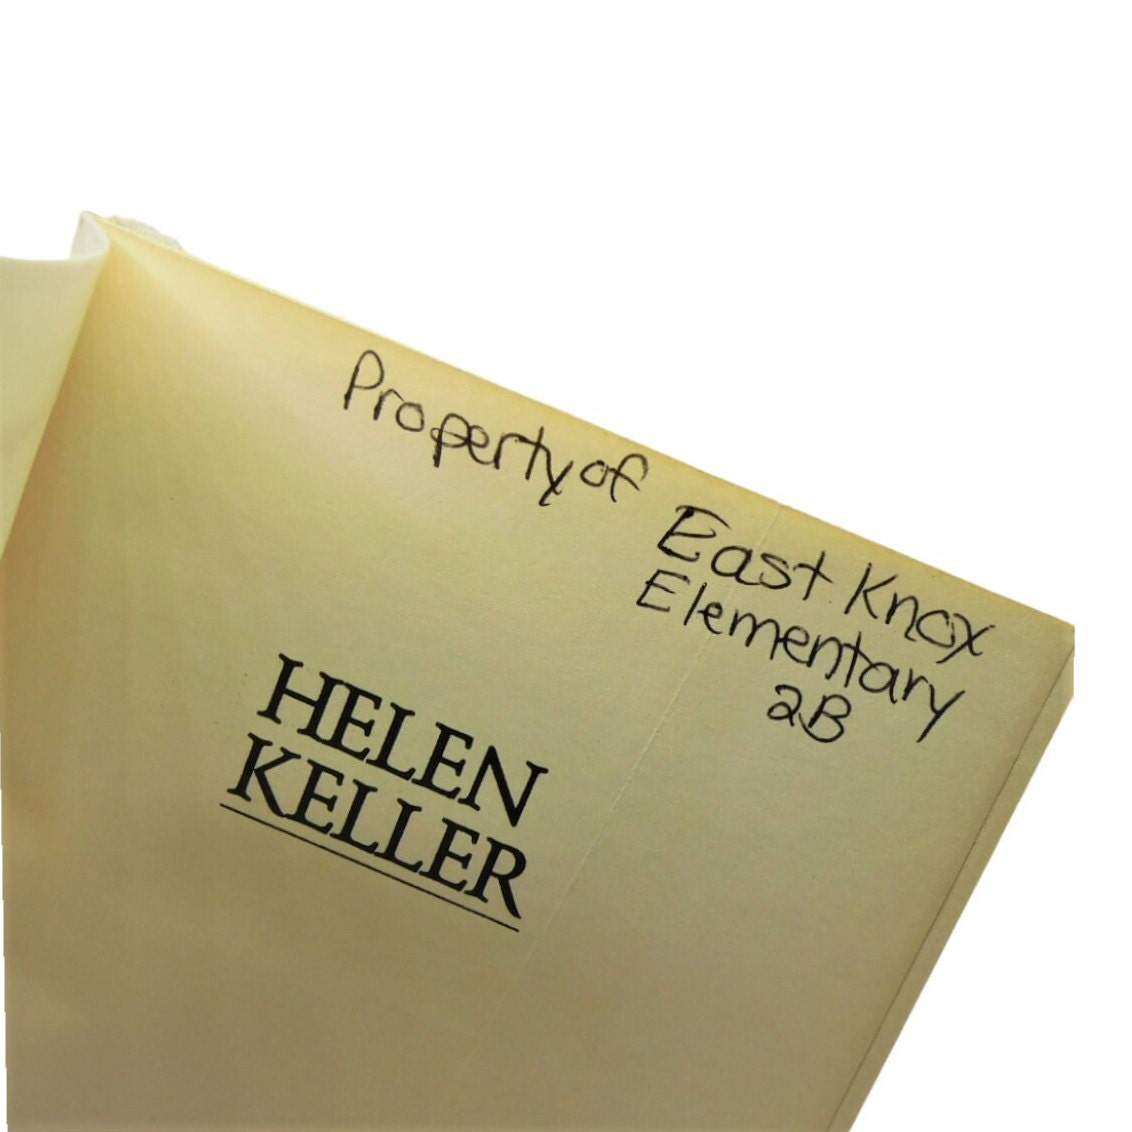 Helen Keller by Margaret Davidson 1969